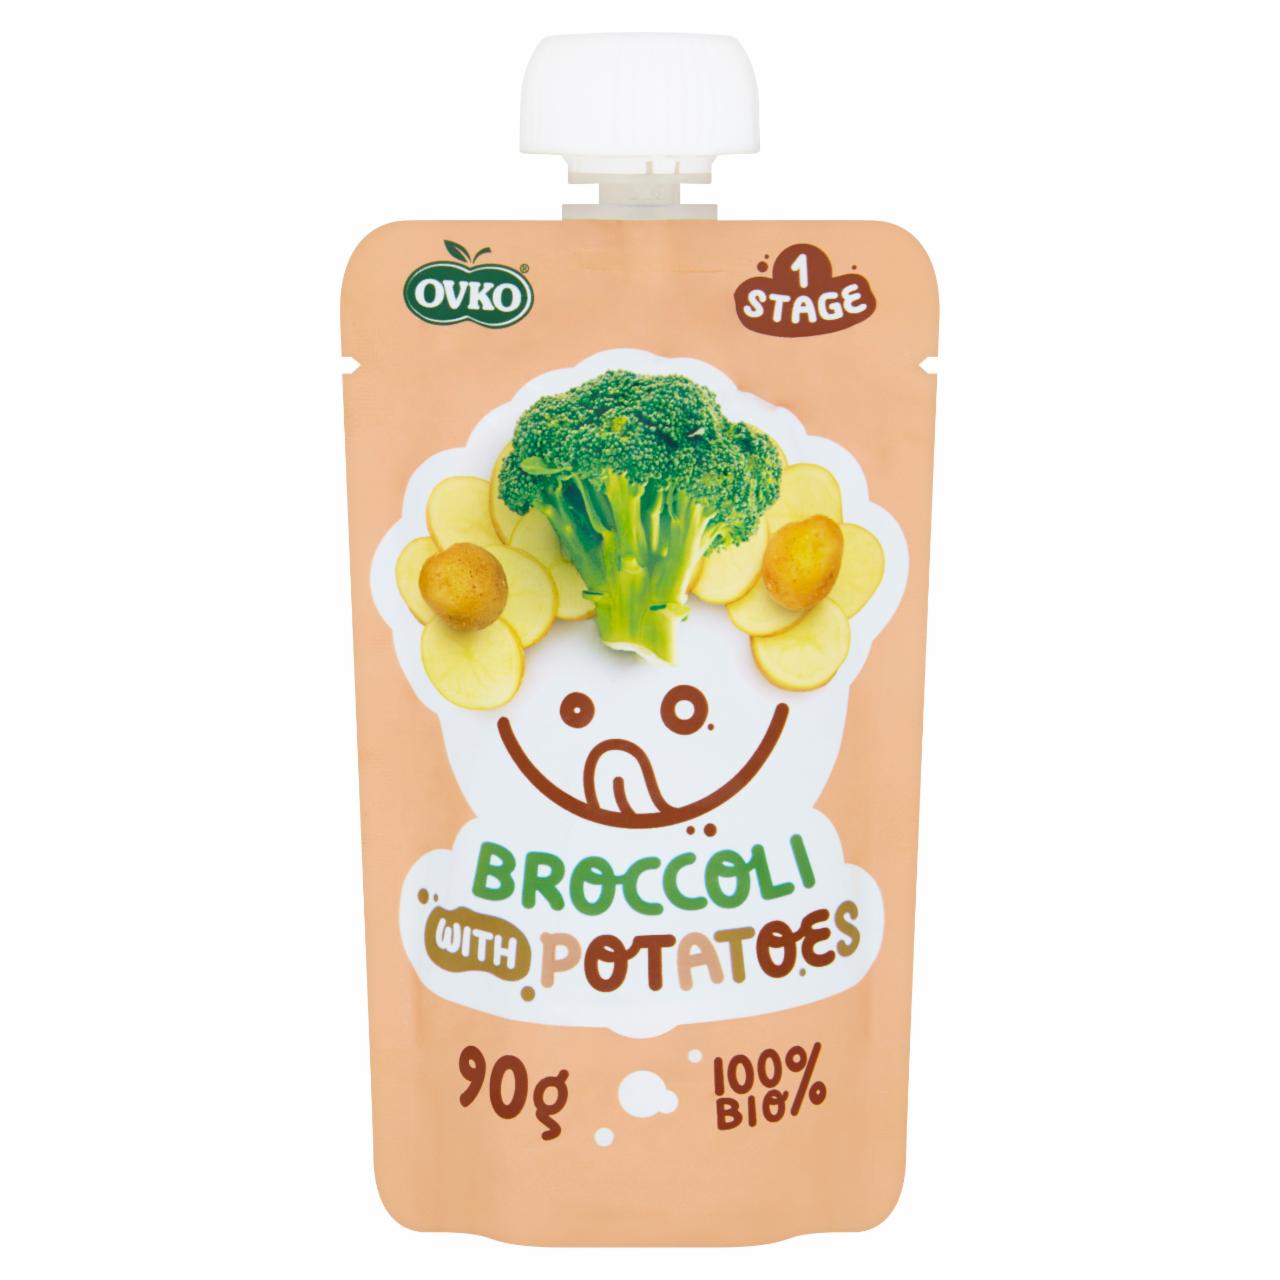 Photo - Ovko Broccoli Potato 6 Months Onwards Organic Puree 90 g